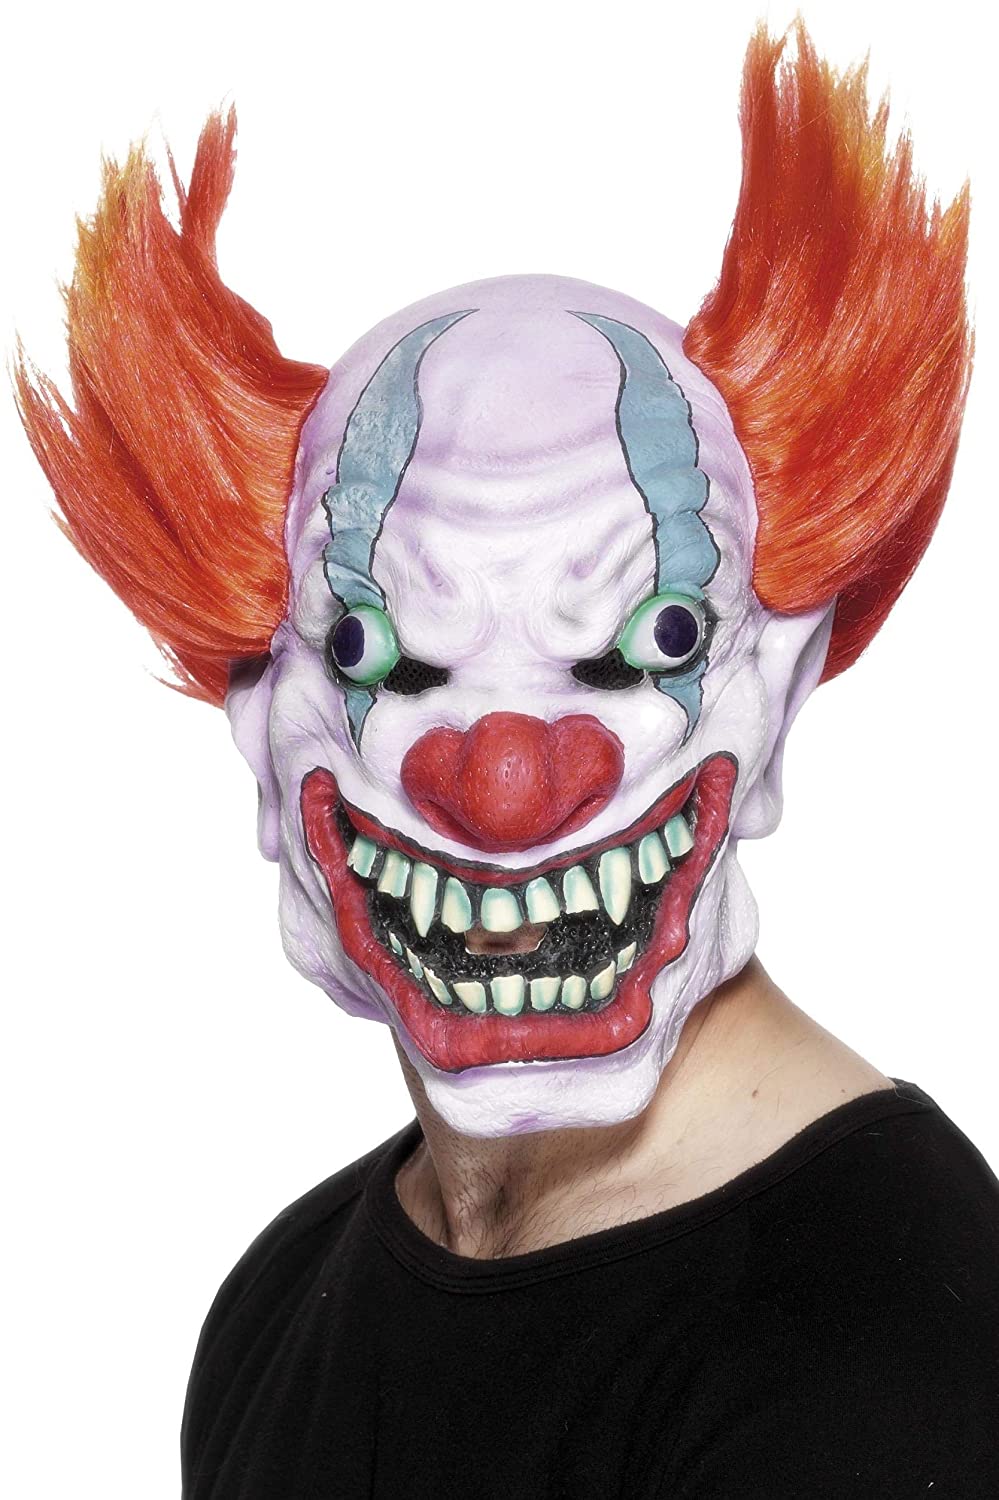 Smiffys Clown Mask